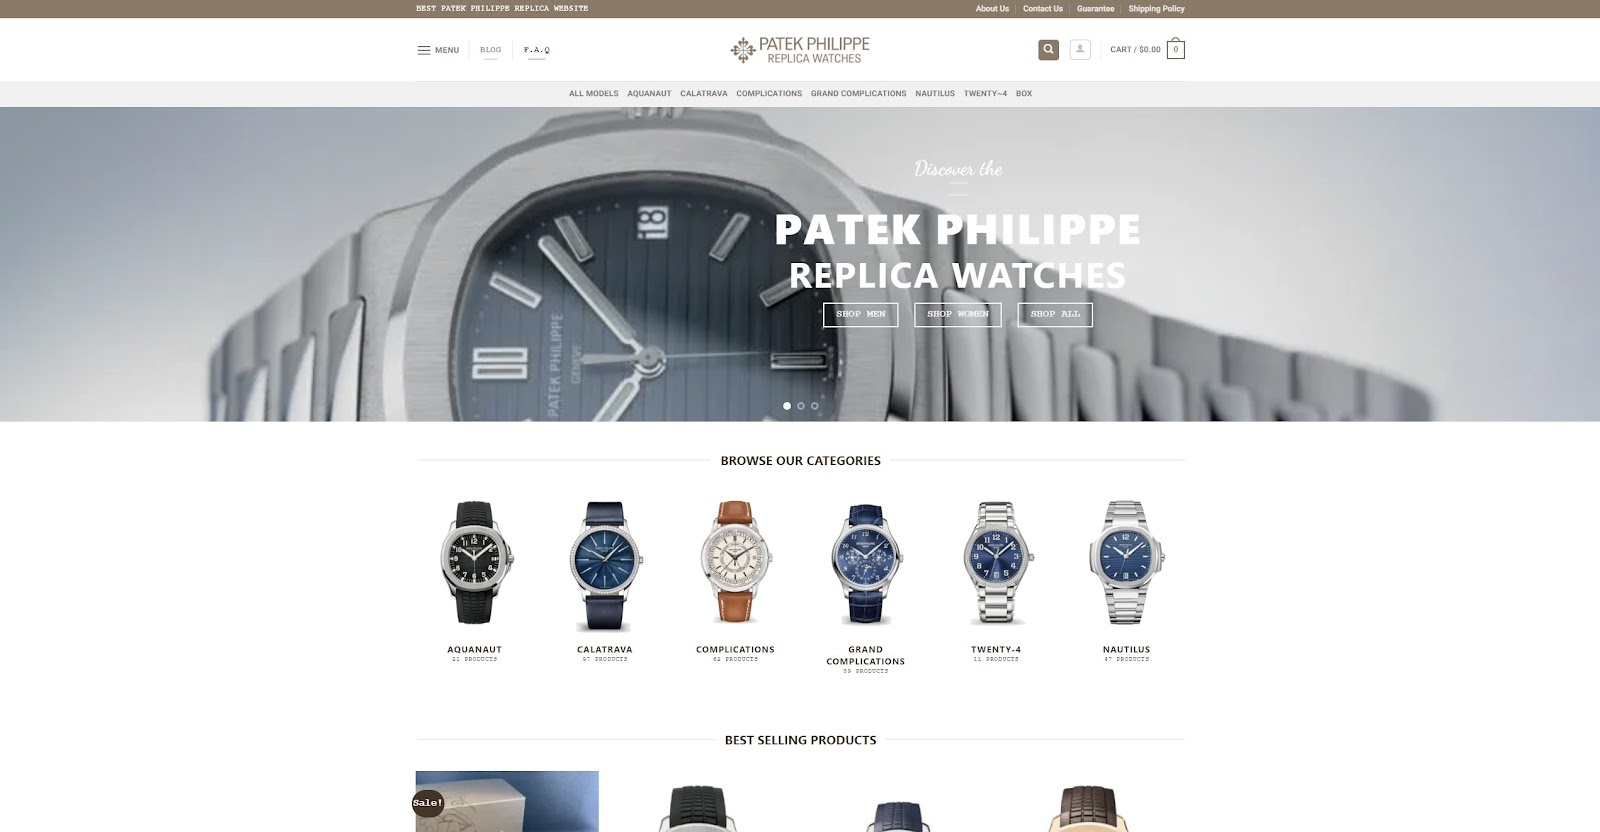 Patek Philippe website image